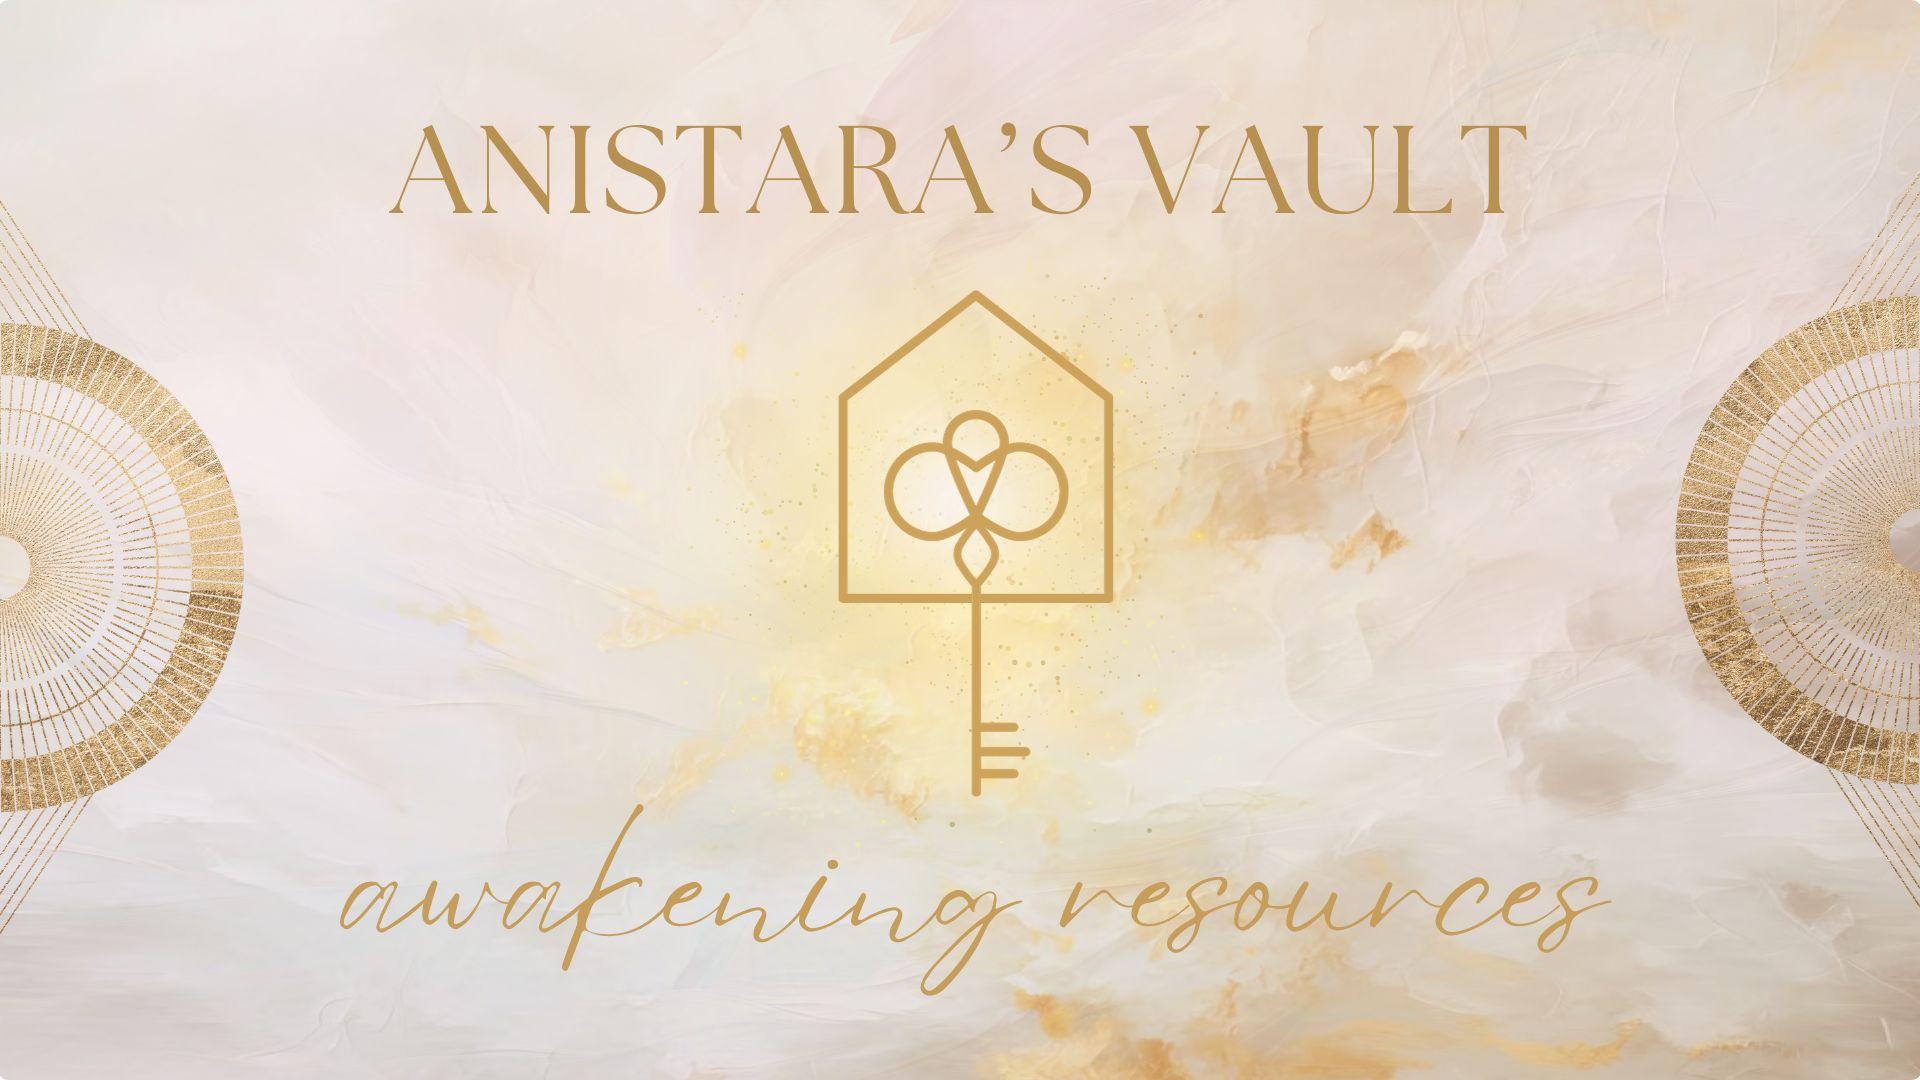  Anistara’s Favorite <br> Awakening Resource